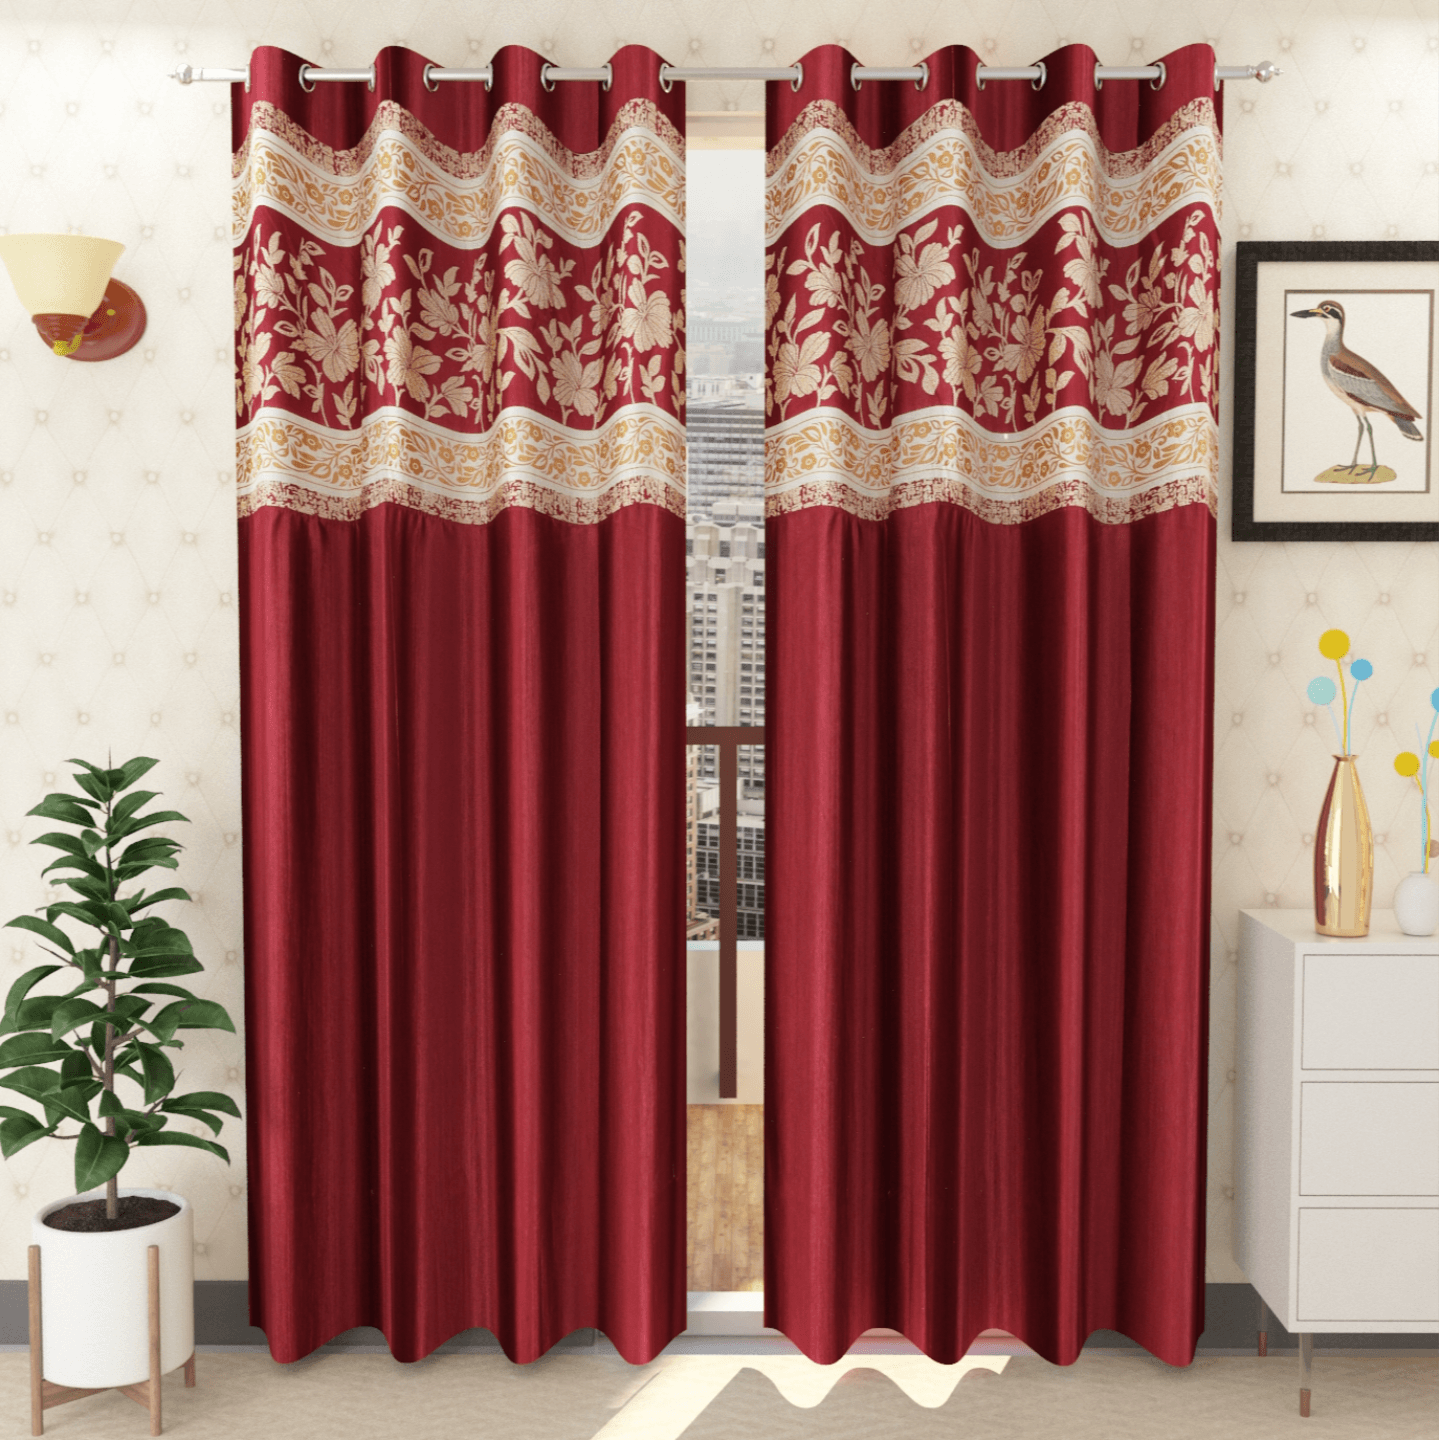 Handtex Home Patchwork curtain for door 7 feet set of 2pc Maroon color